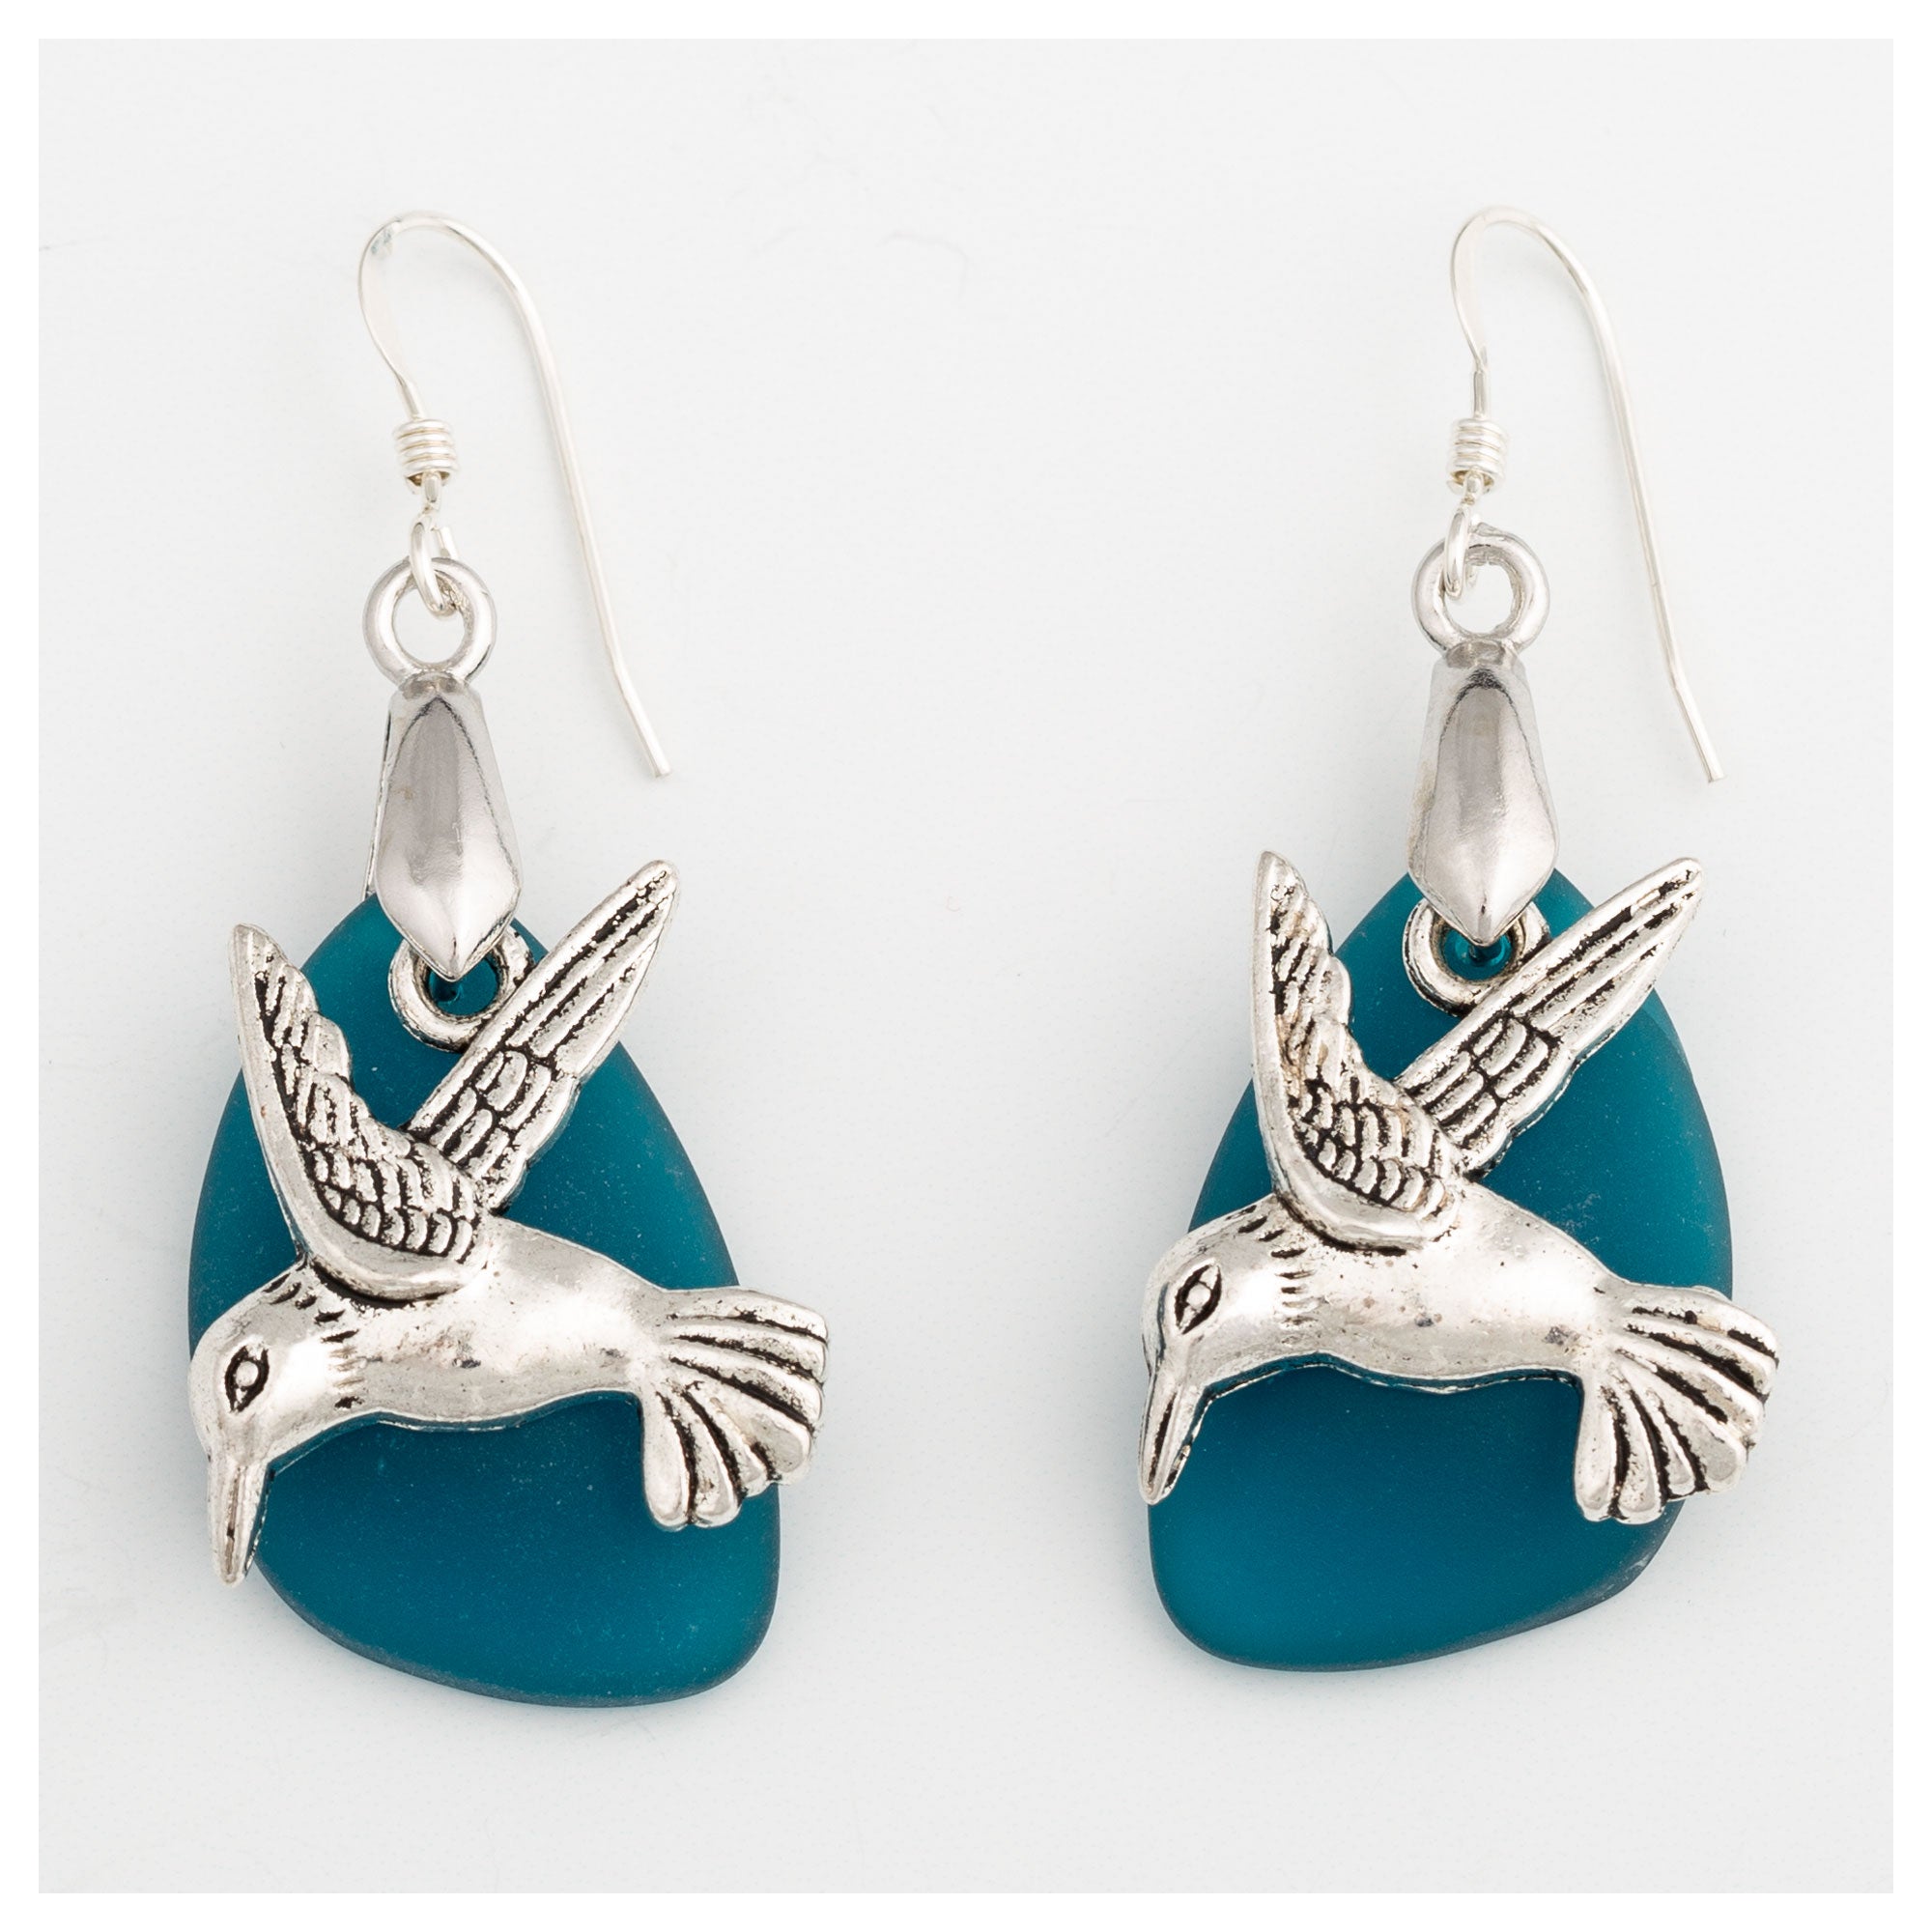 Hummingbird Sea Glass Earrings - Teal